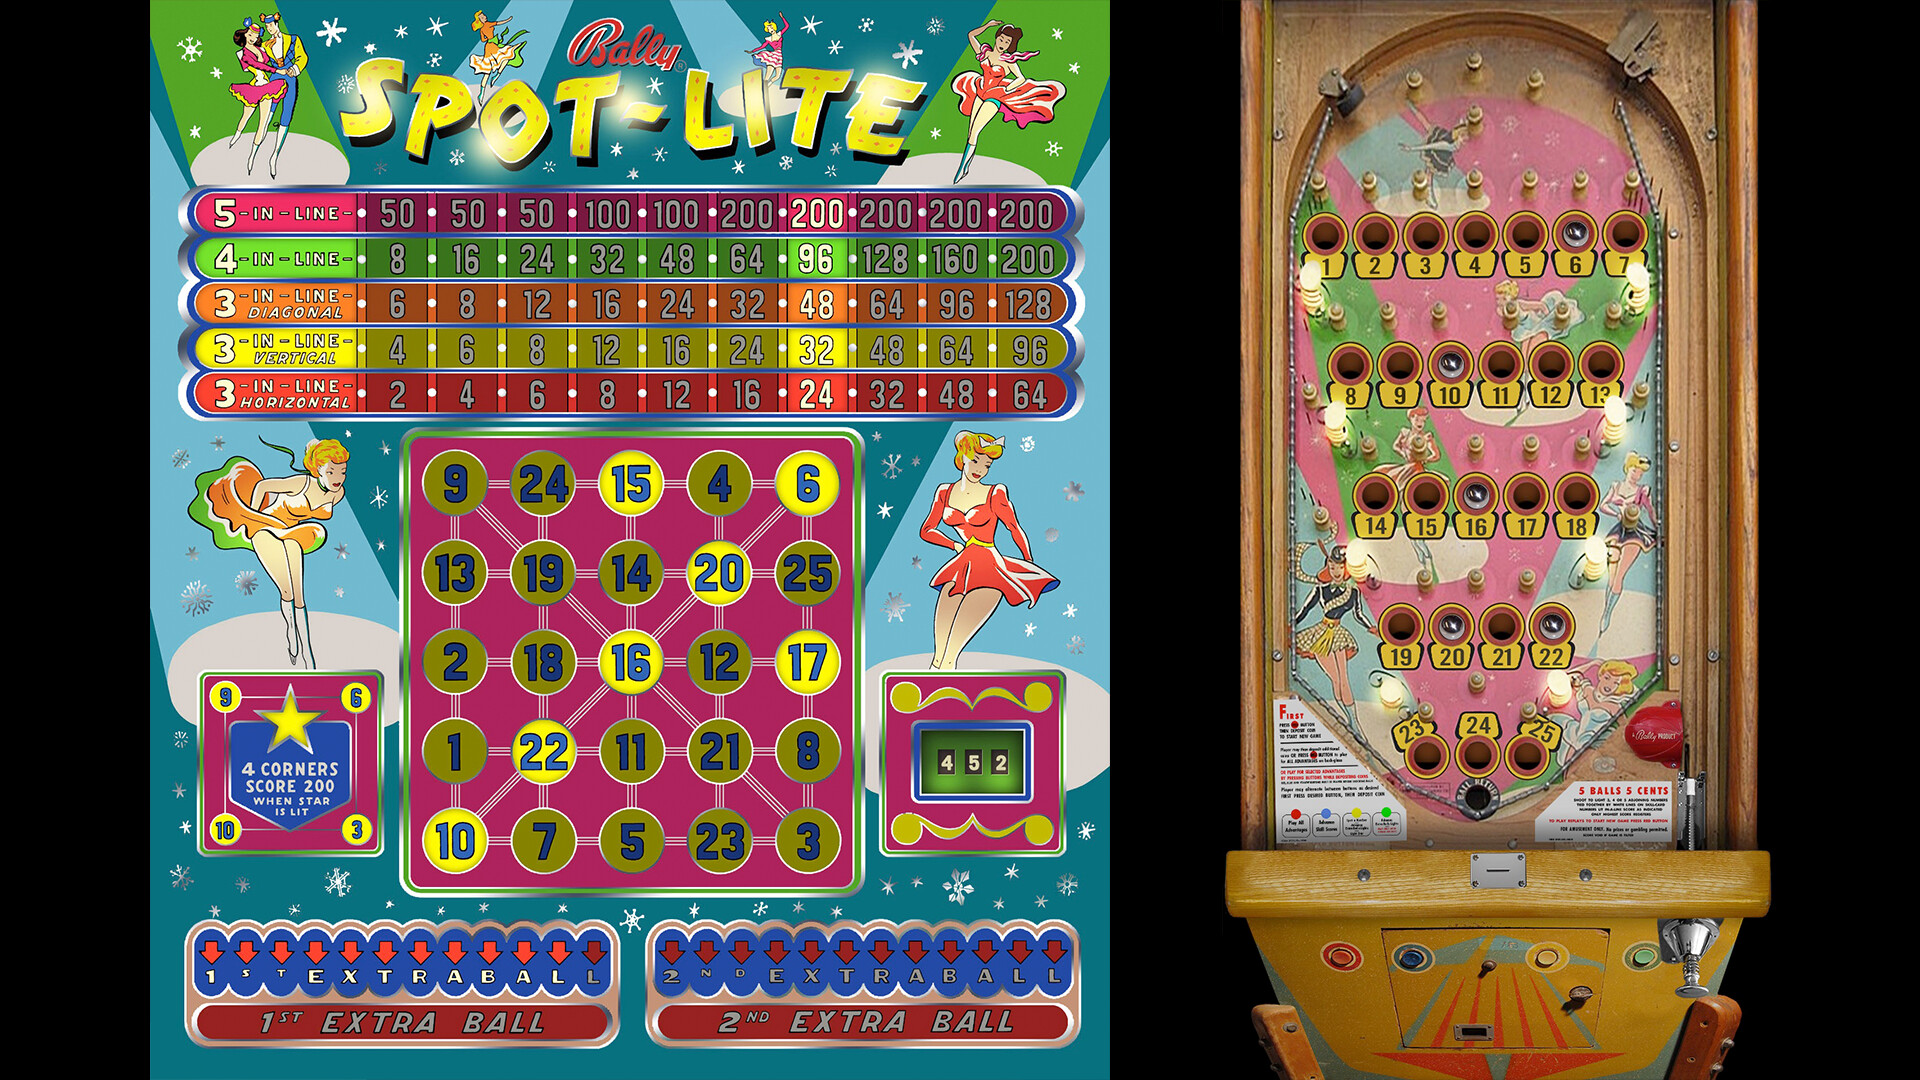 Bingo Pinball Gameroom - Bally Spot Lite Featured Screenshot #1